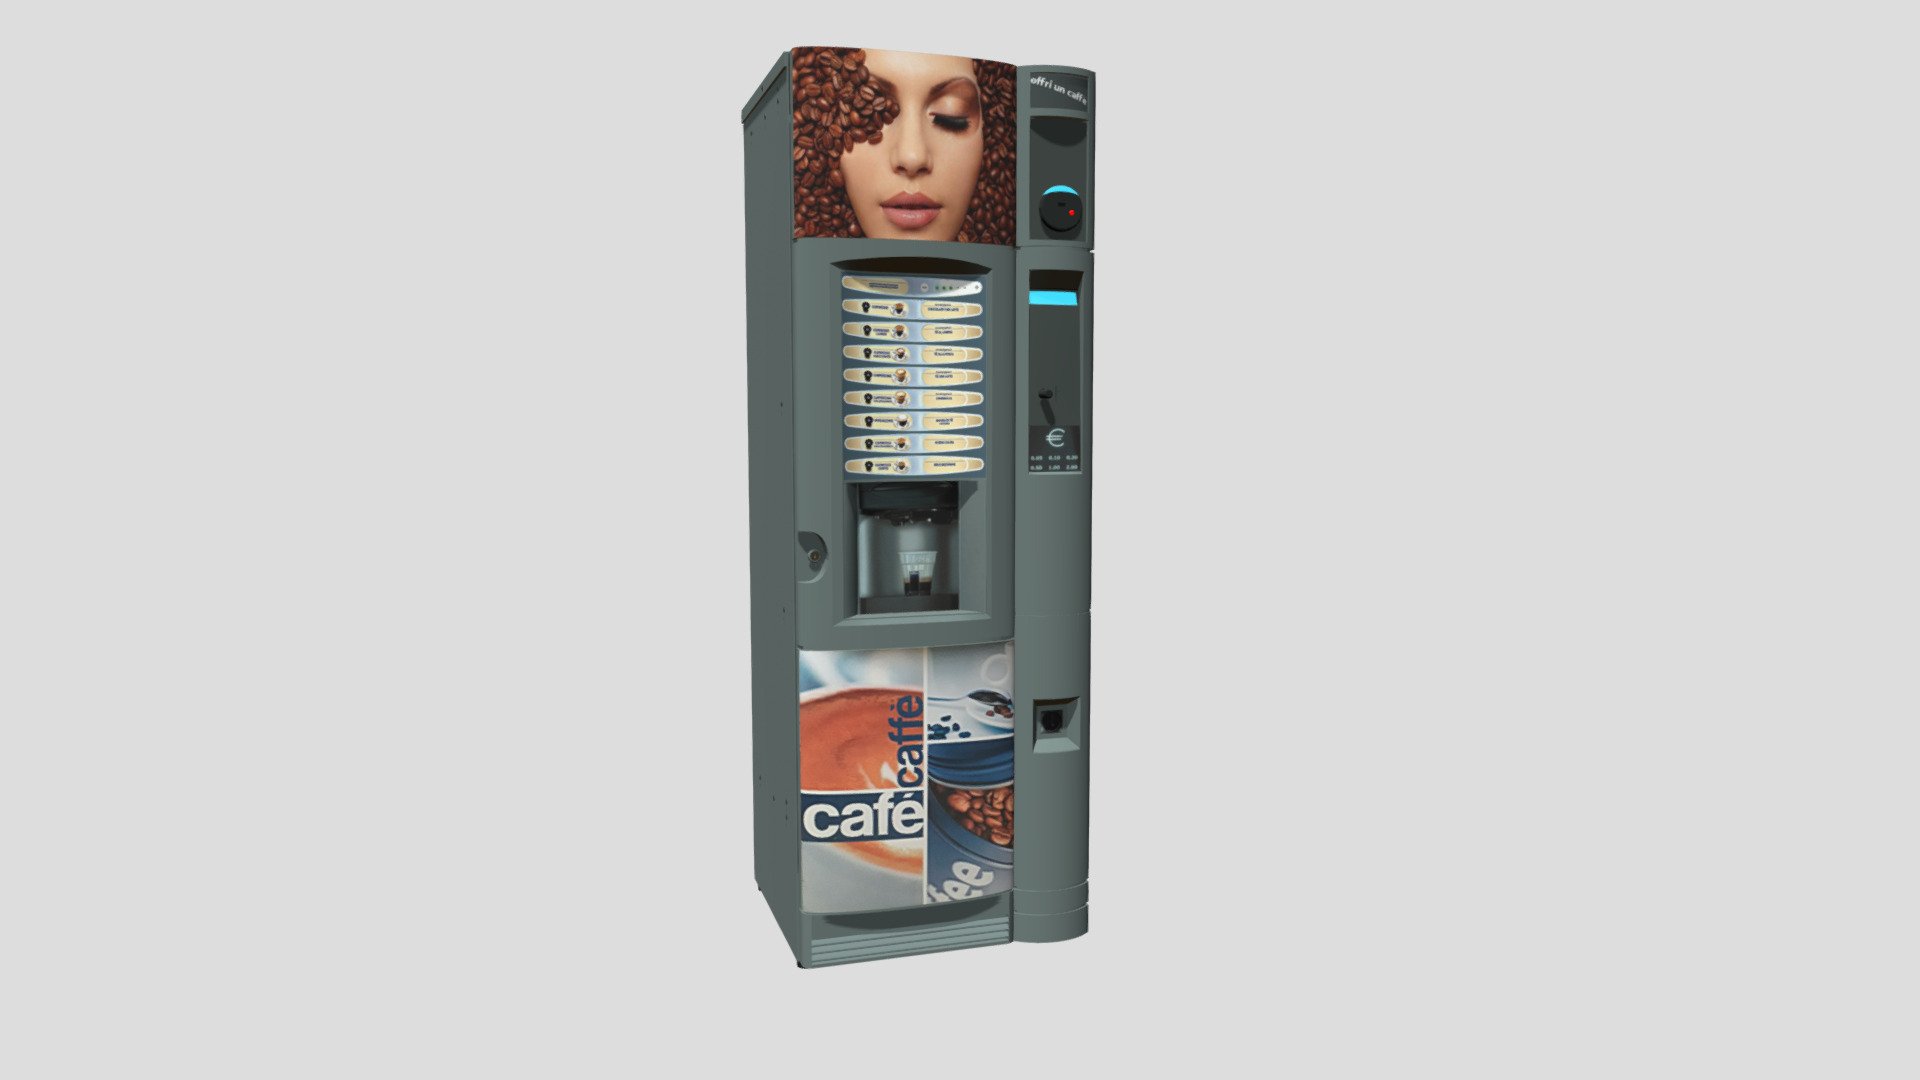 coffee dispenser